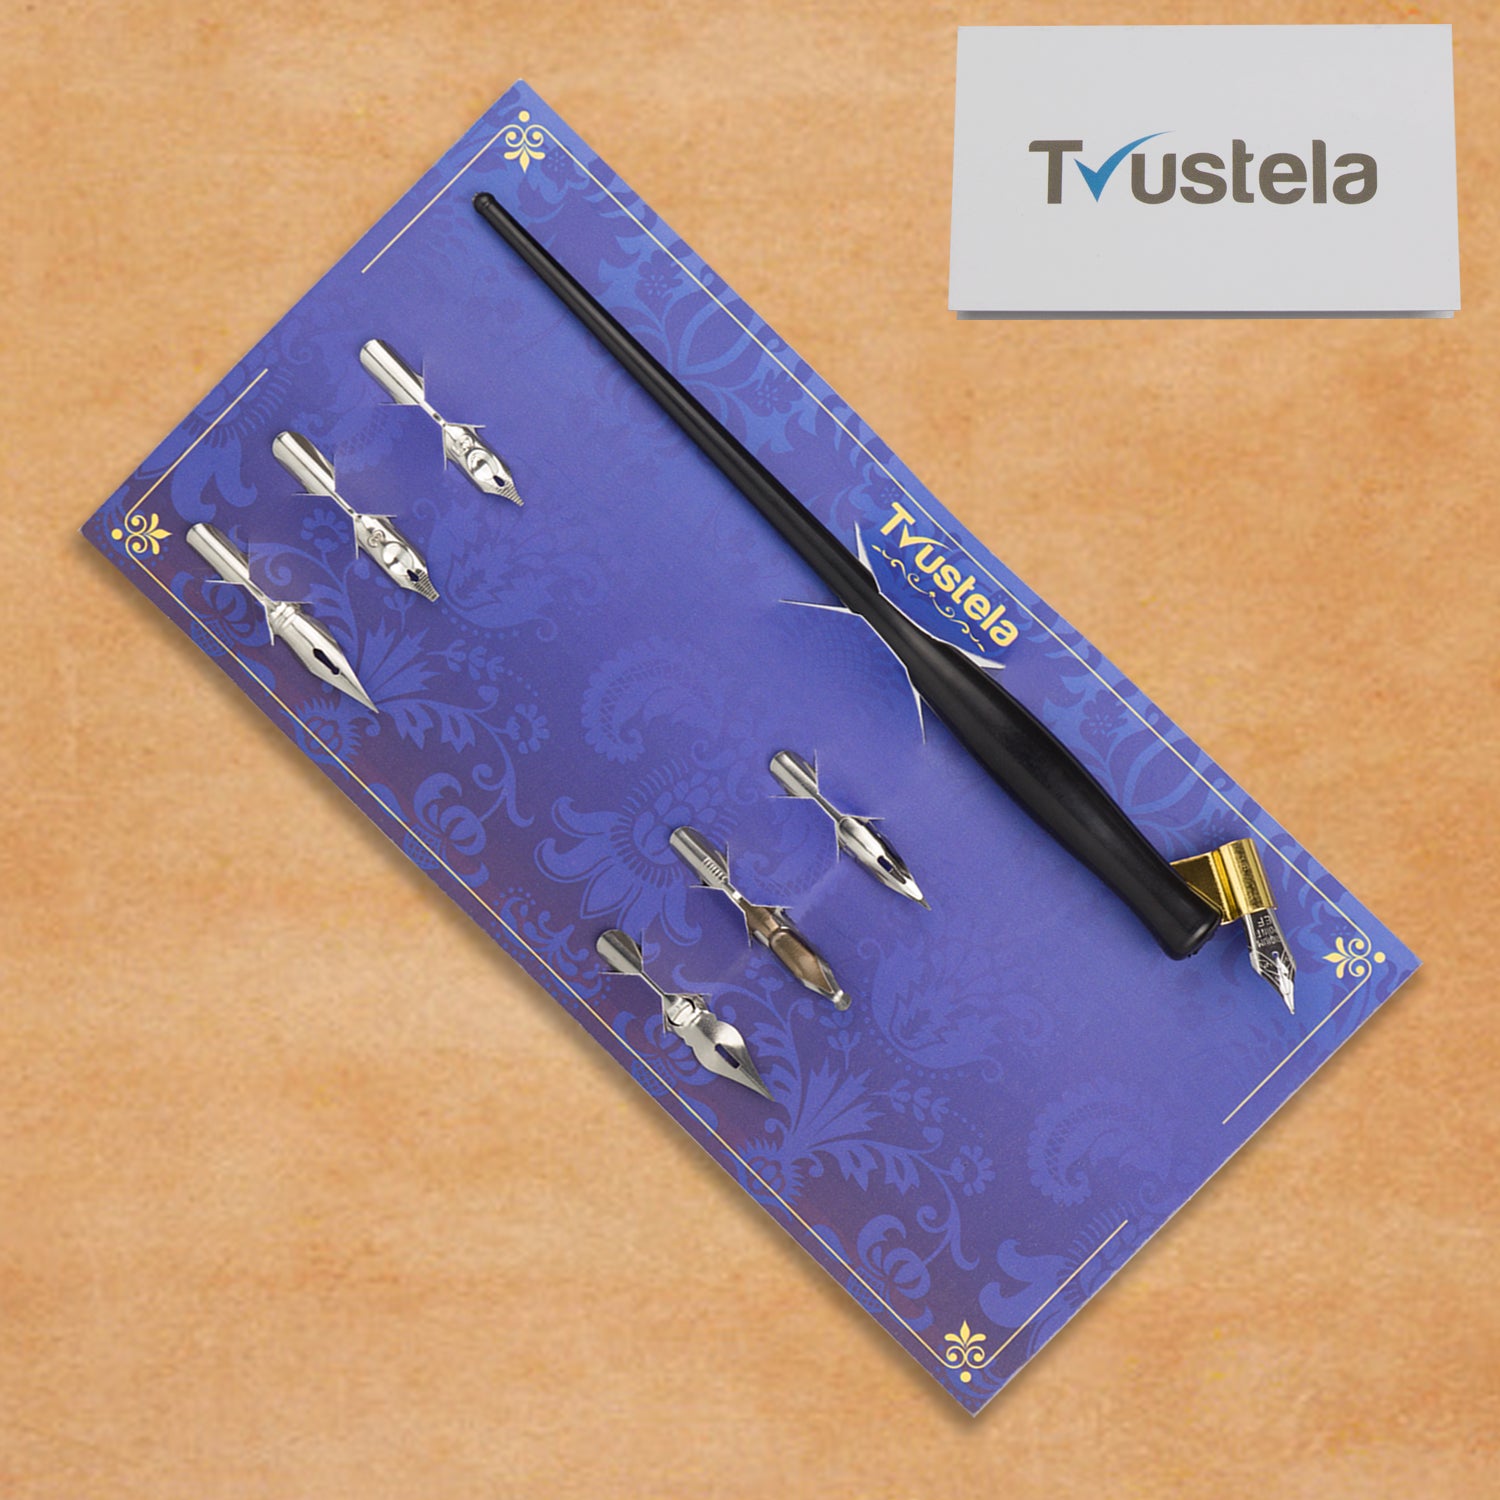 3pcs oblique pen holder wooden fountain pen calligraphy kits for beginners